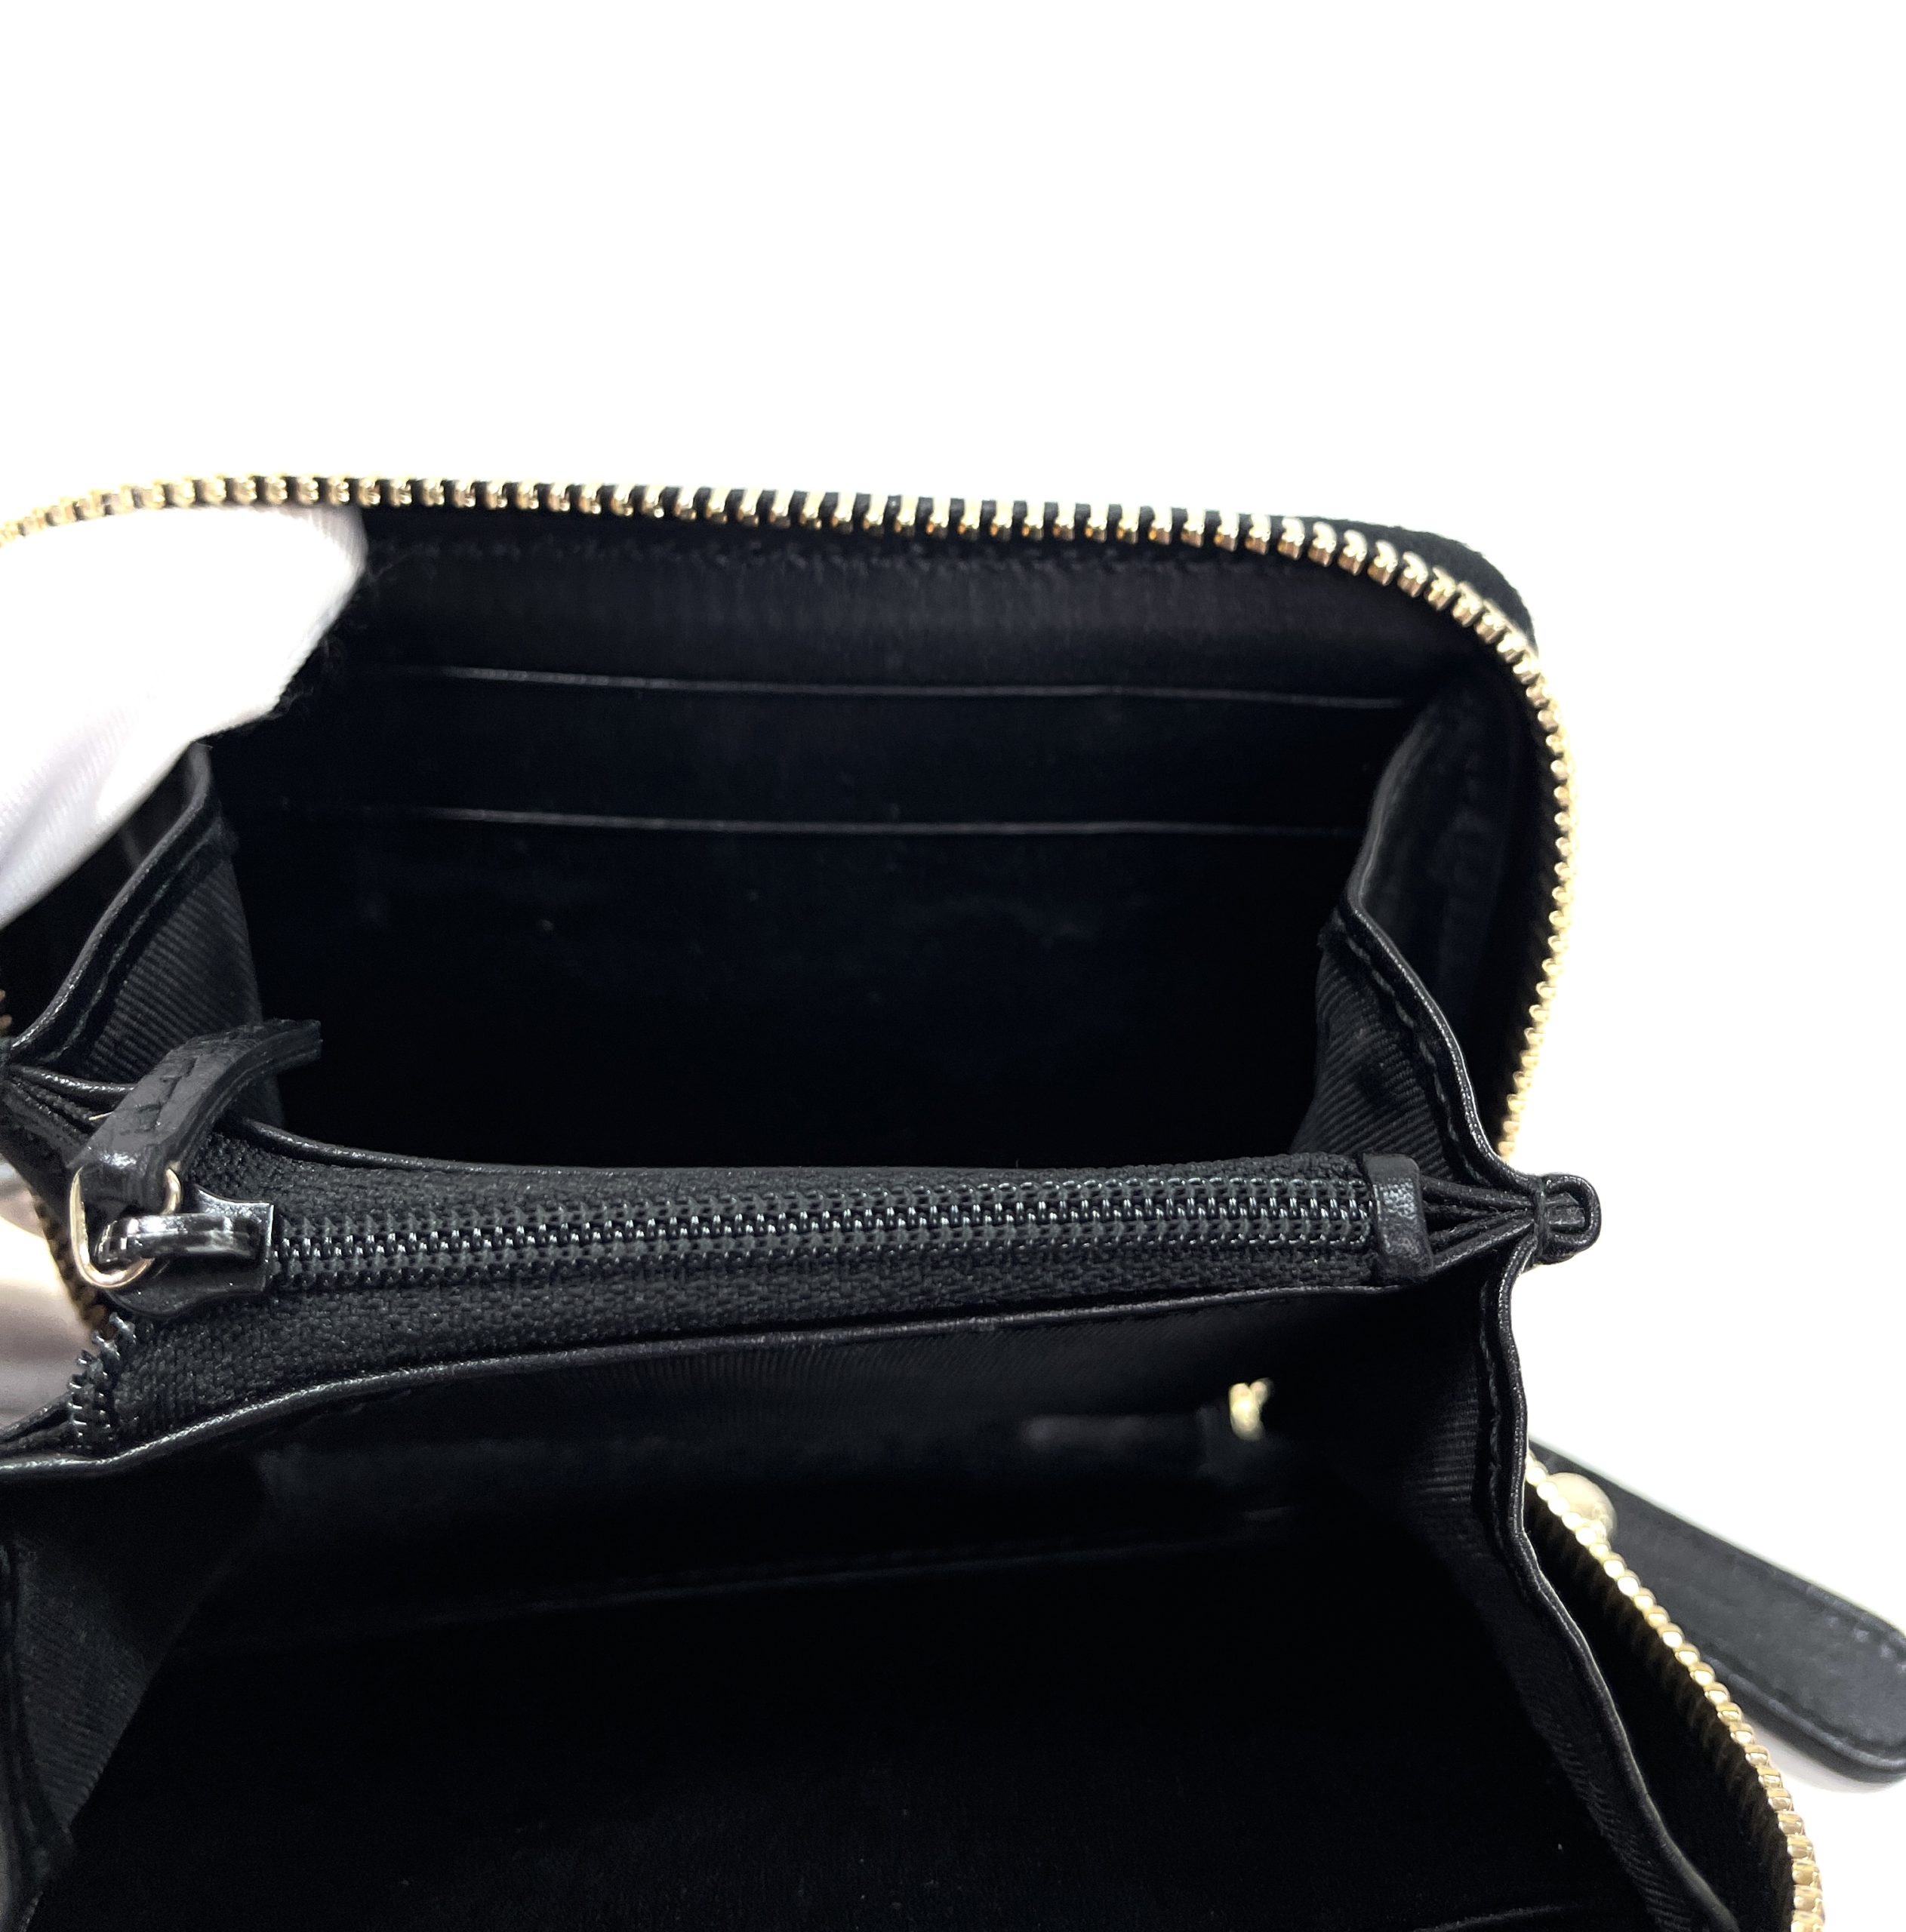 Gucci Web Guccissima Leather Zip Around Wallet Black